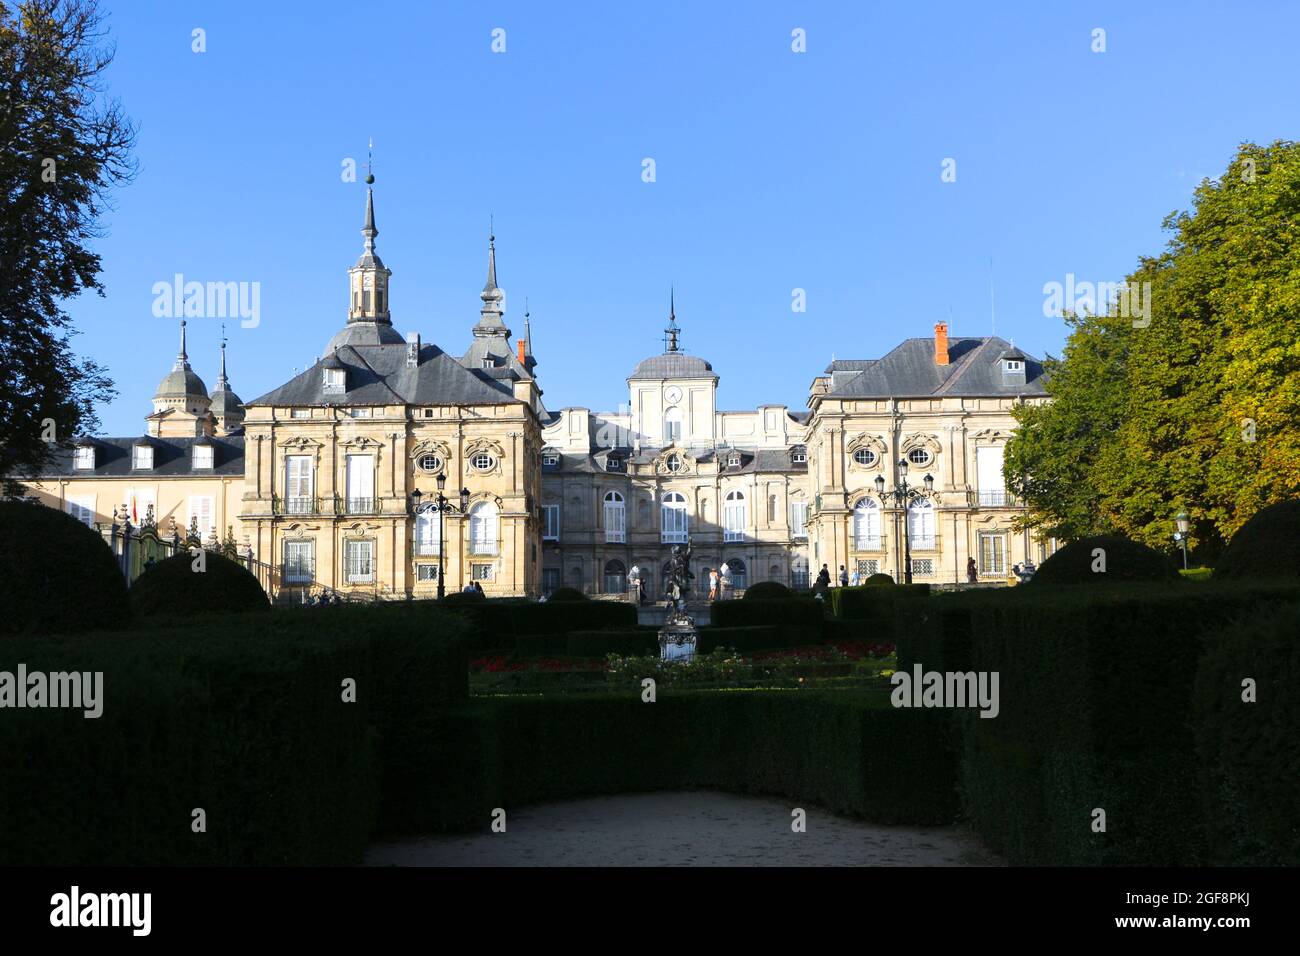 Real Sitio de San Ildefonso Segovia Castile und Leon Spanien Stockfoto